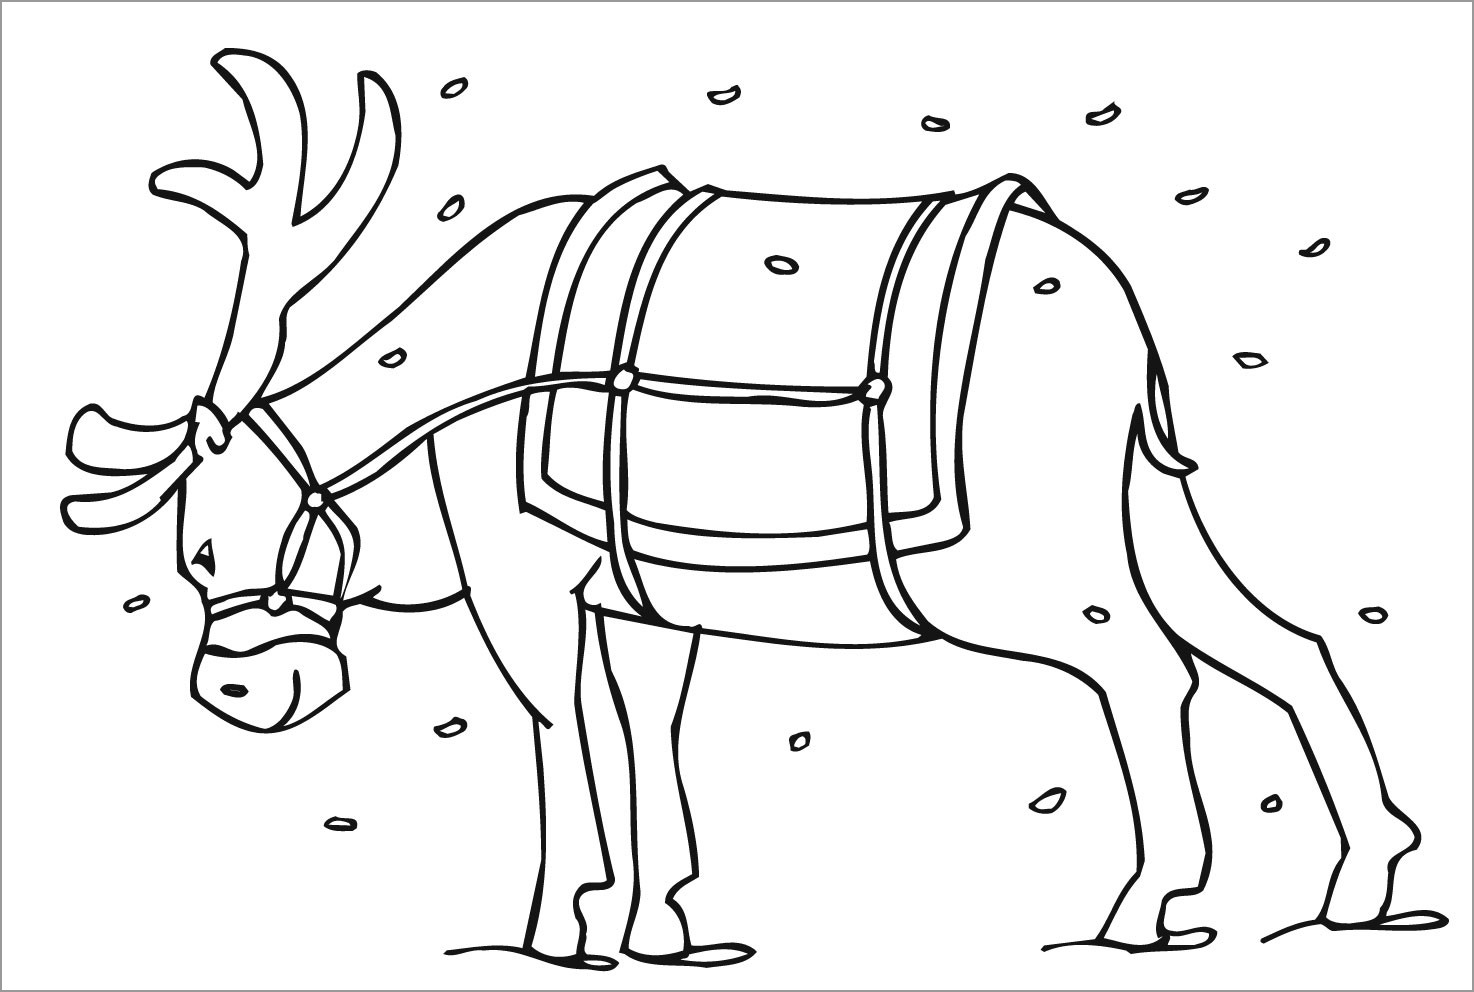 Reindeer Coloring Pages for Preschoolers